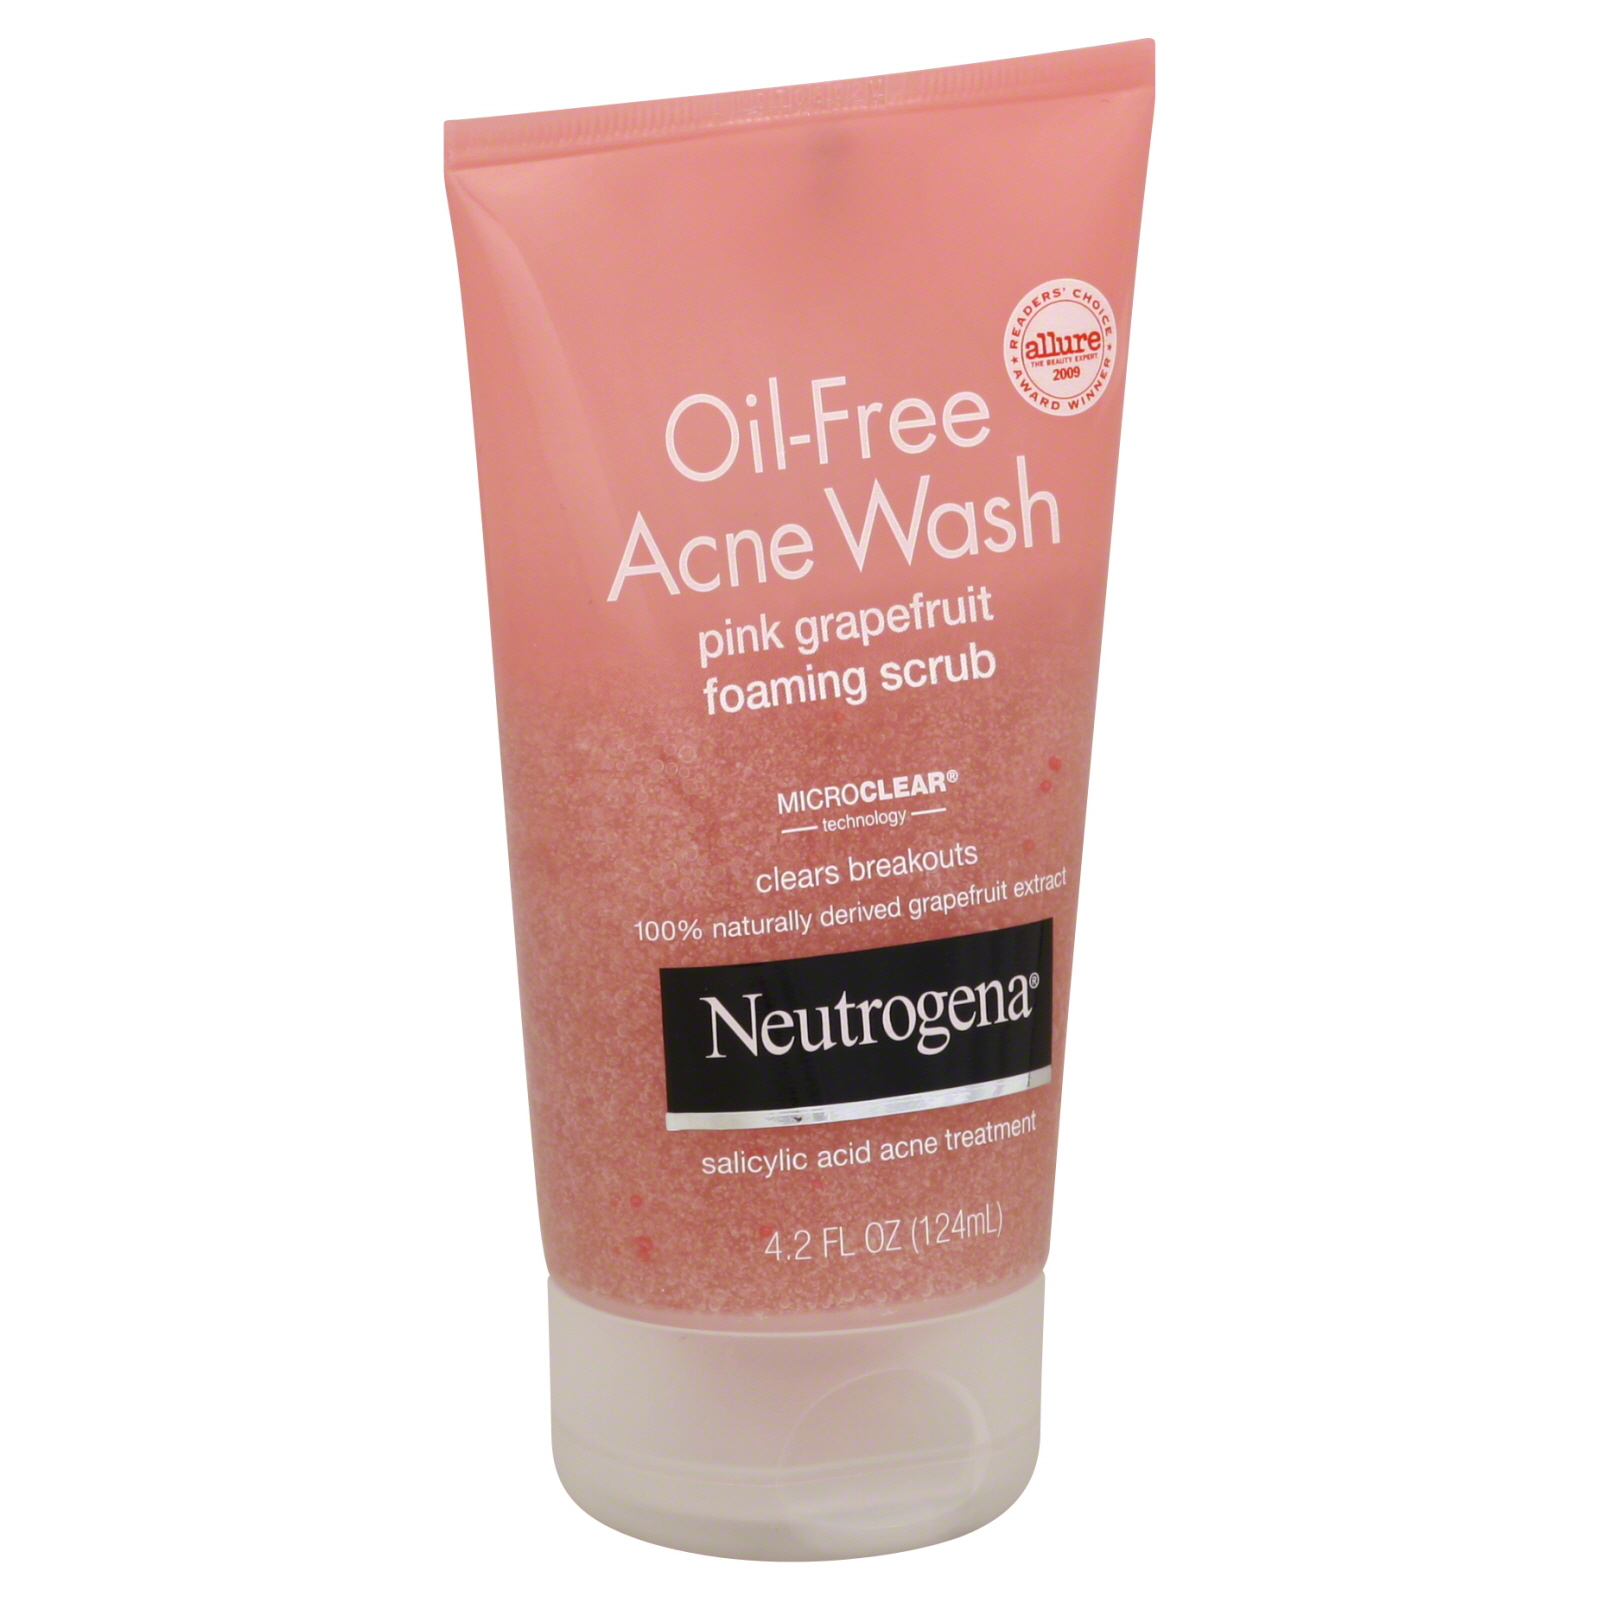 Neutrogena Oil-Free Acne Wash, Pink Grapefruit Foaming Scrub, 4.2 fl oz (125 ml)